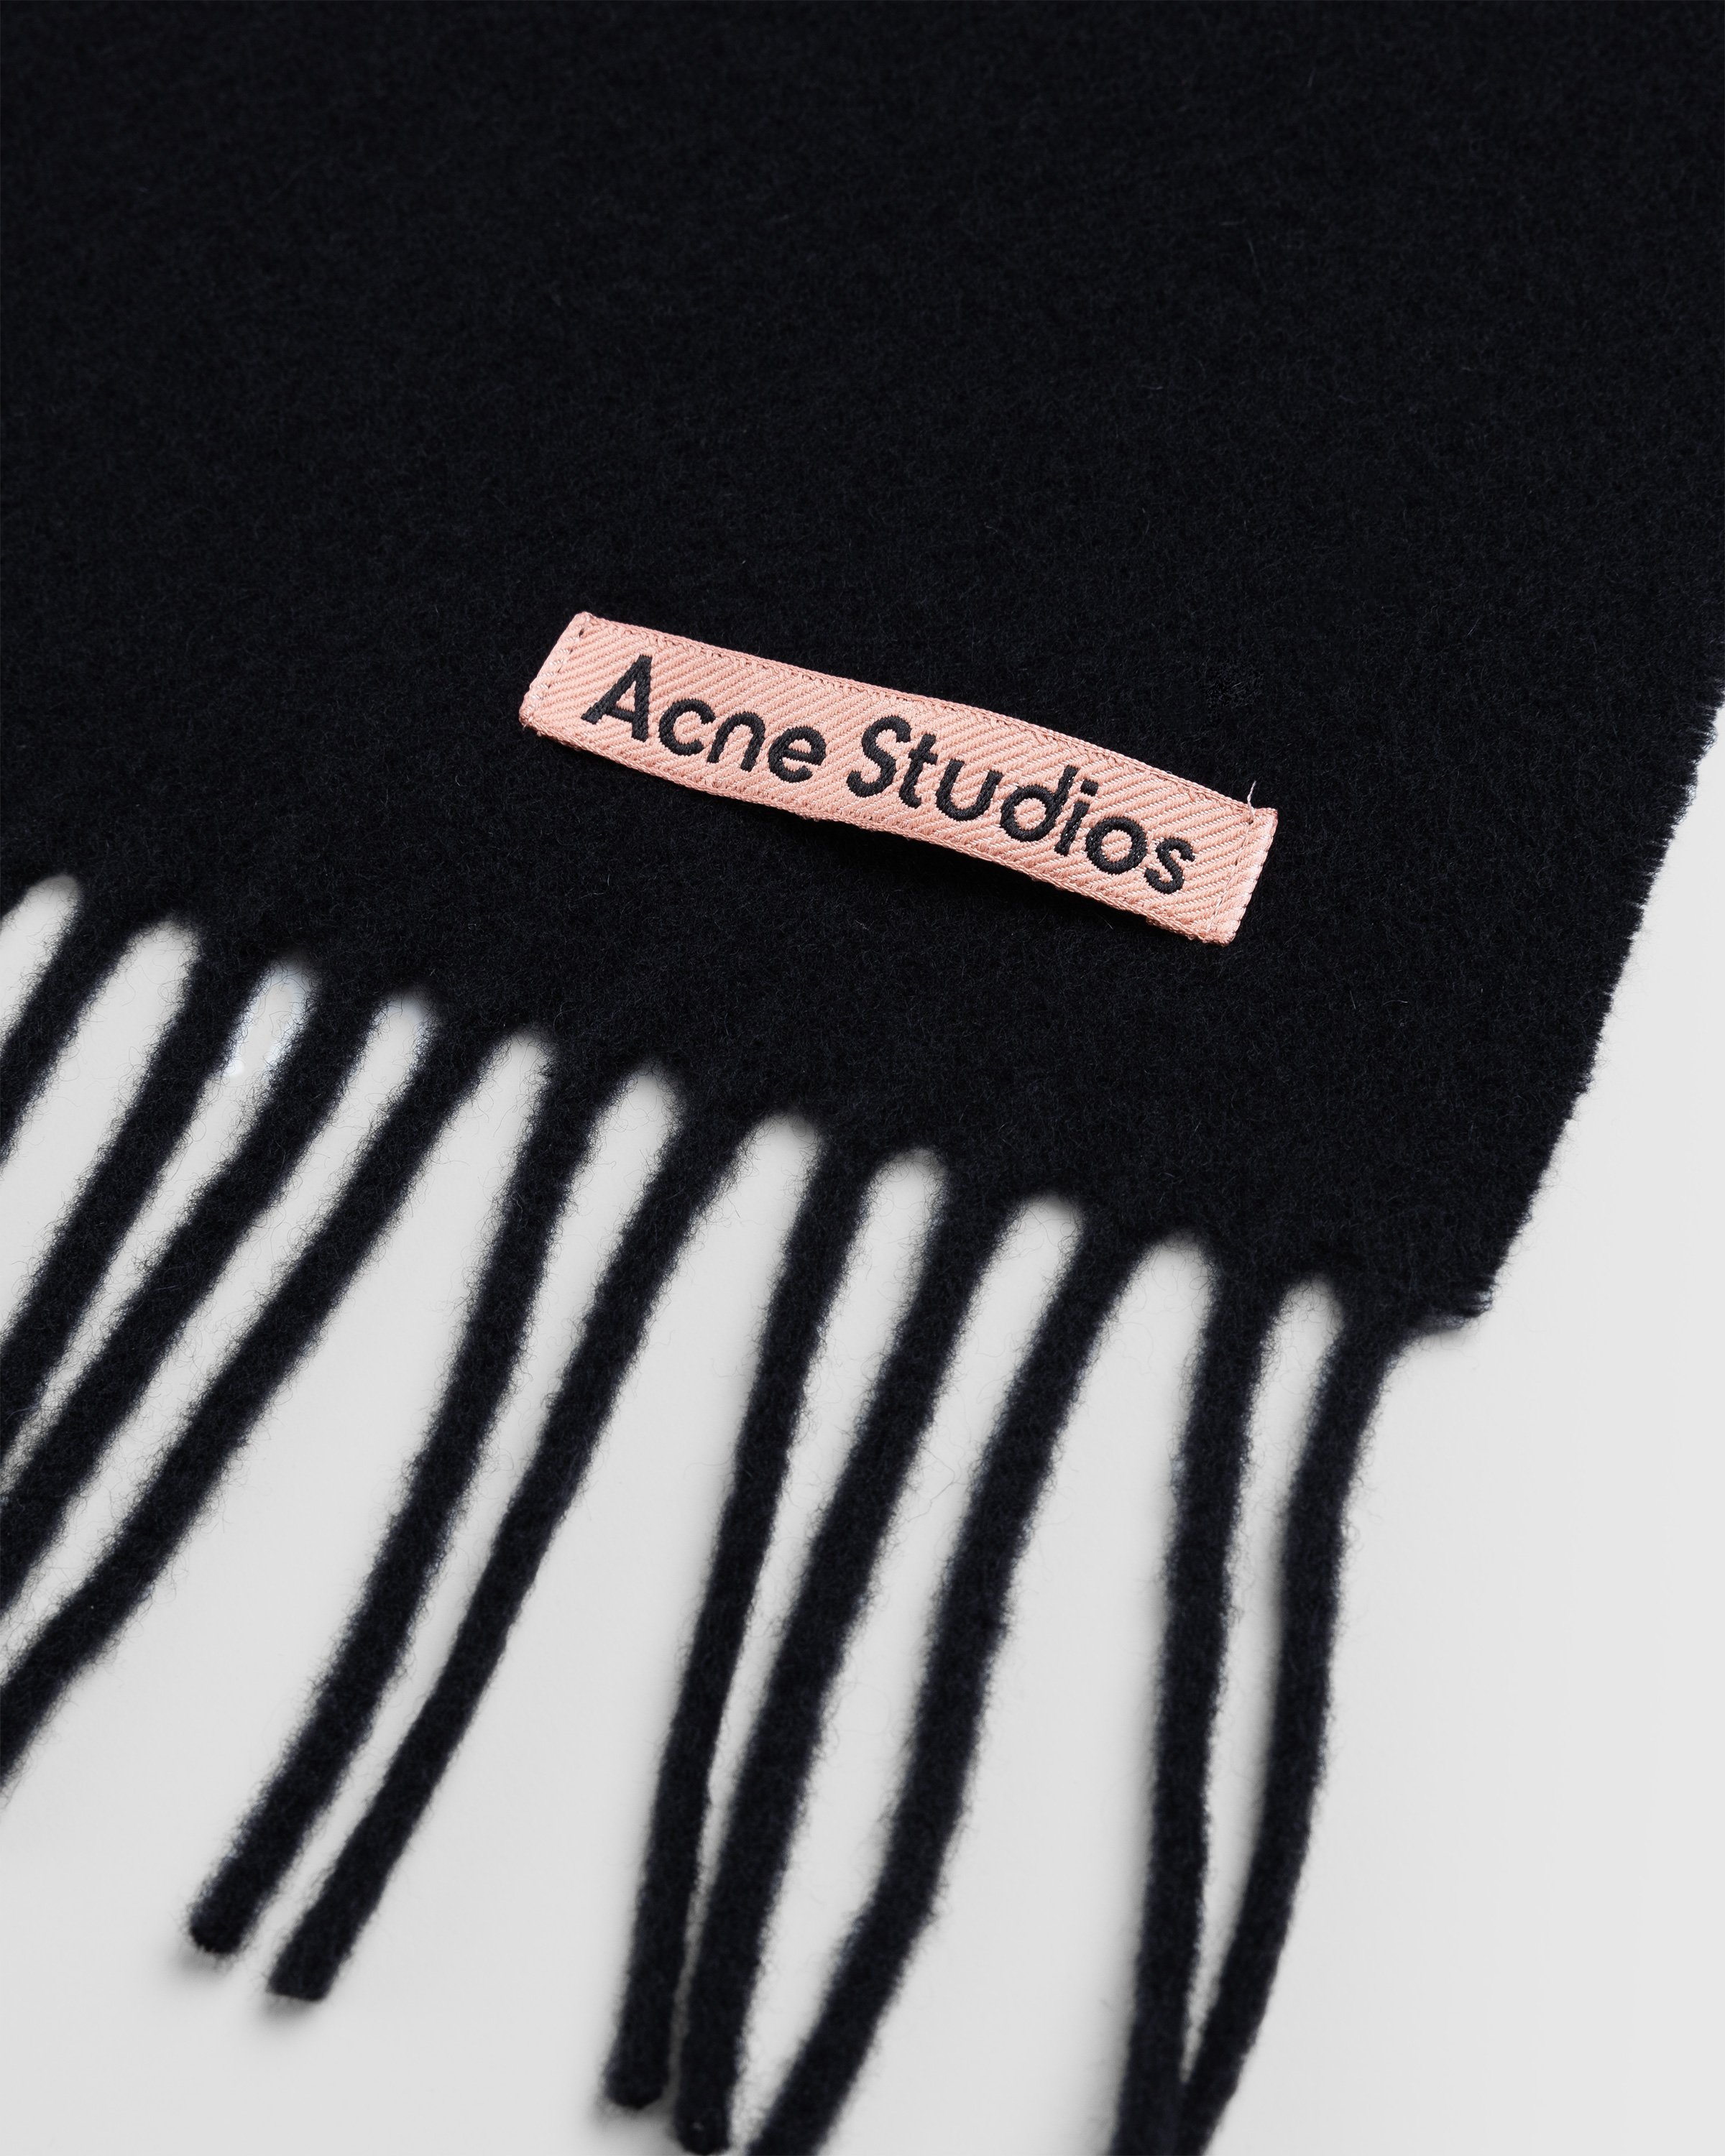 Acne Studios - Wool Fringe Scarf Black - Accessories - Black - Image 3